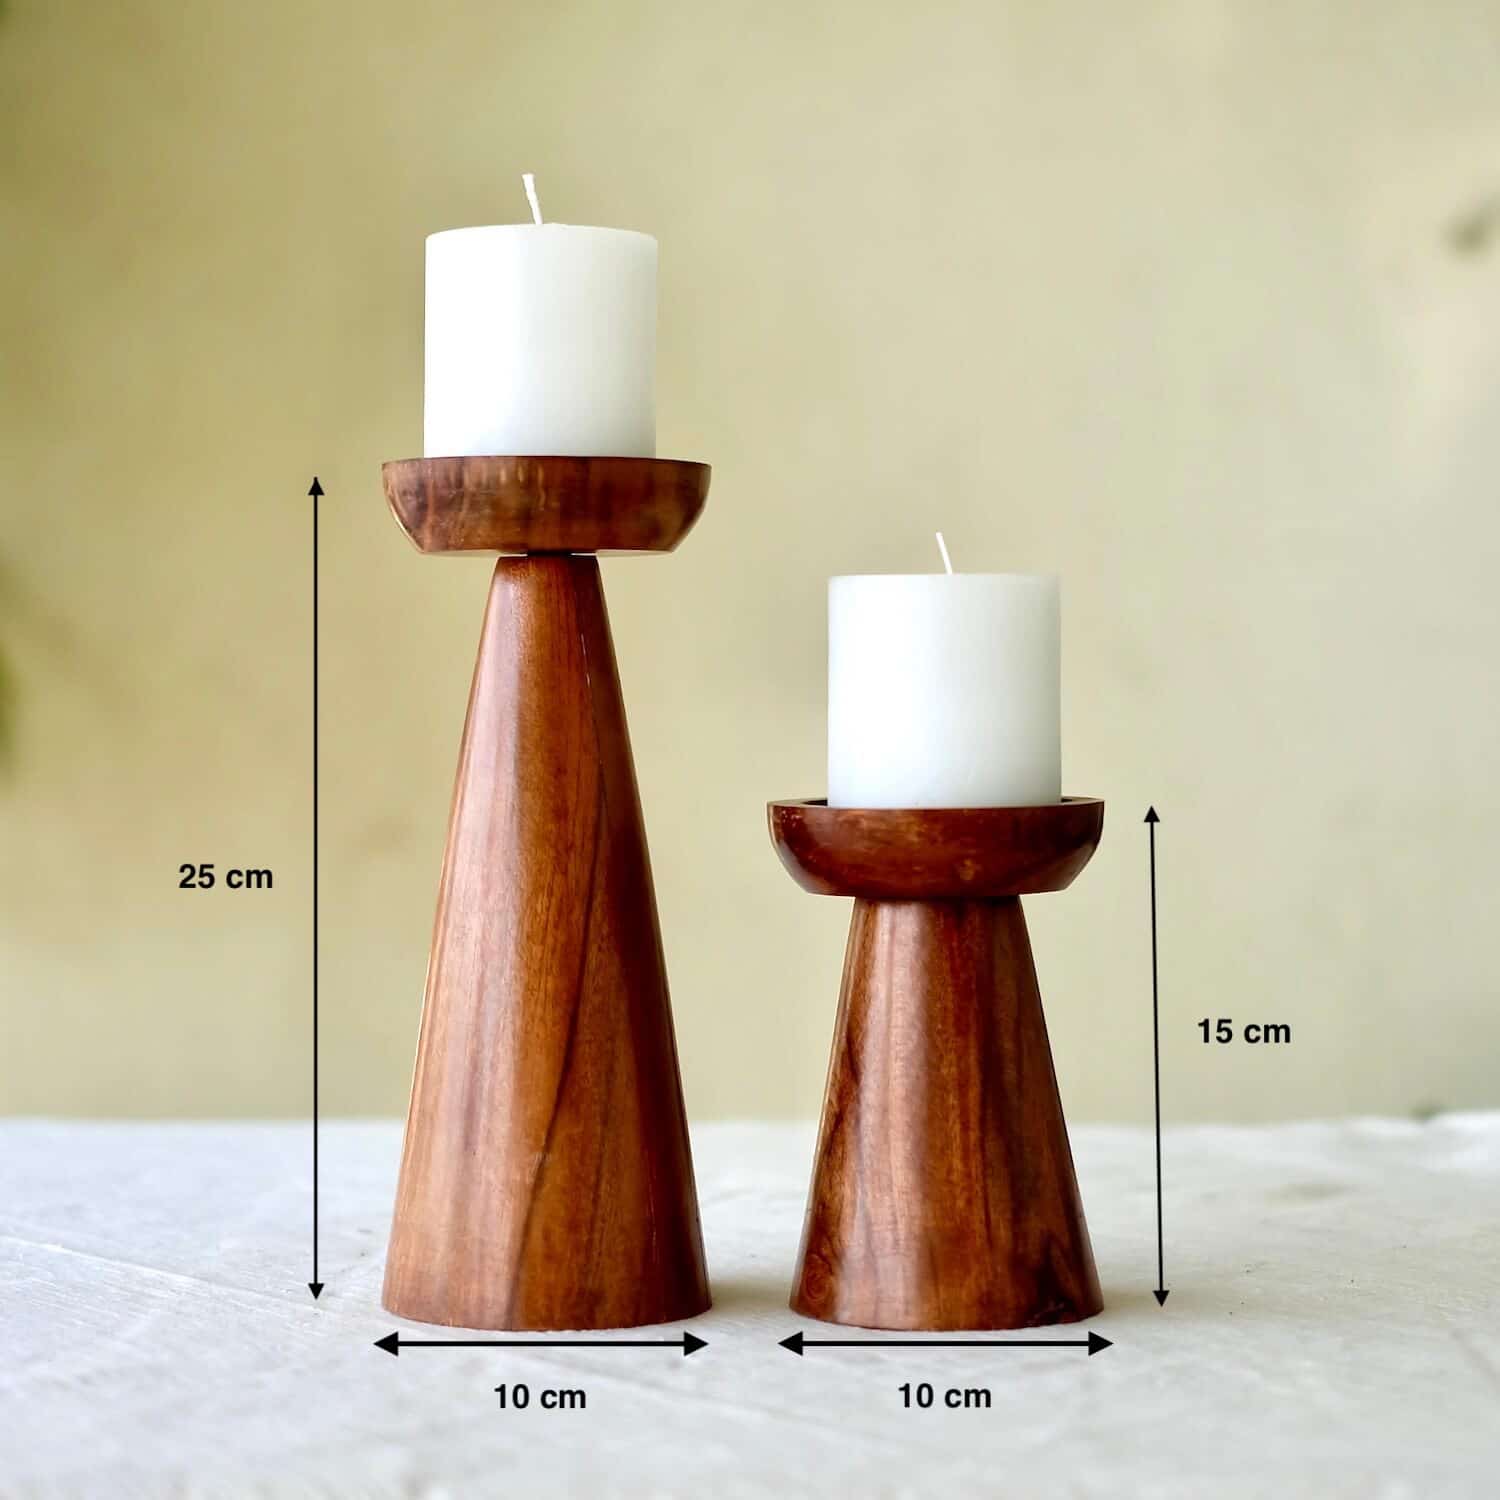 Graceful Pillar Candleholders: Set of 2